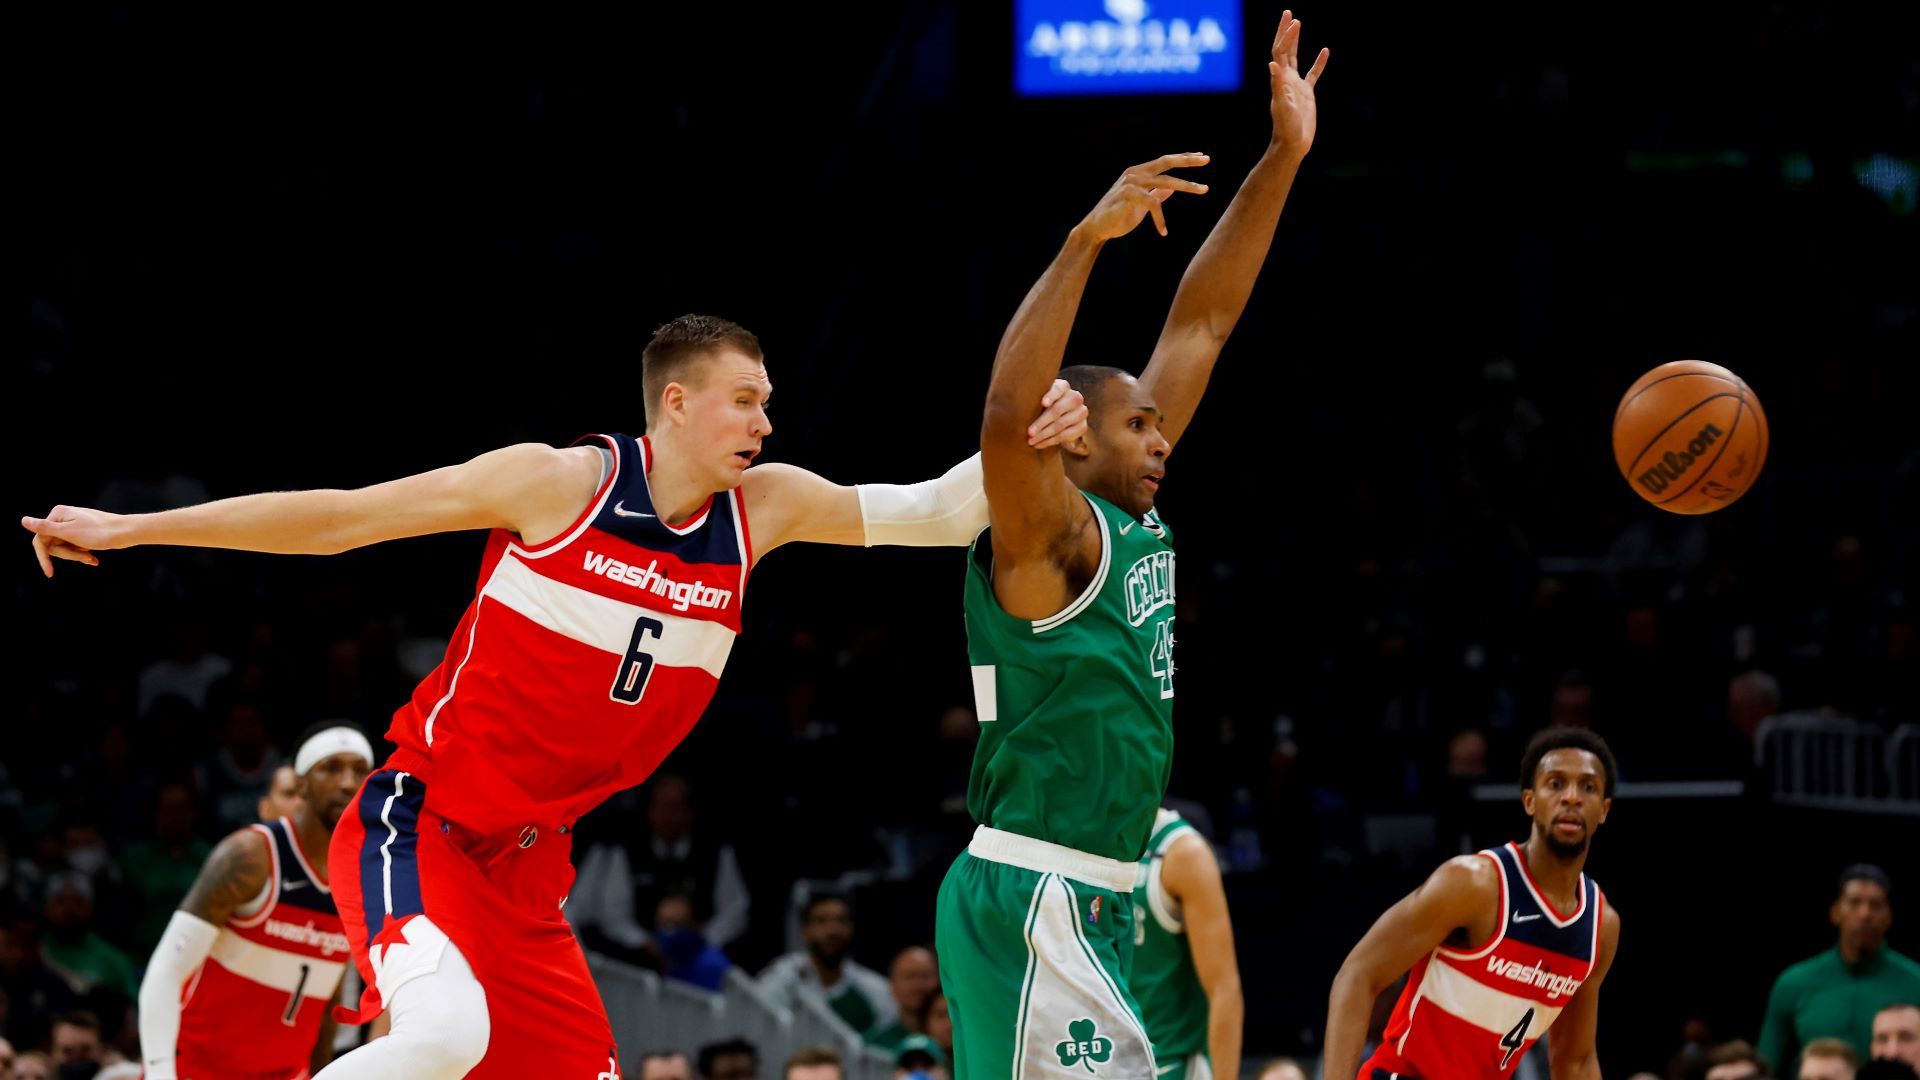 Celtics offseason questions #2: How will the Kristaps Porzingis trade  impact the Celtics?